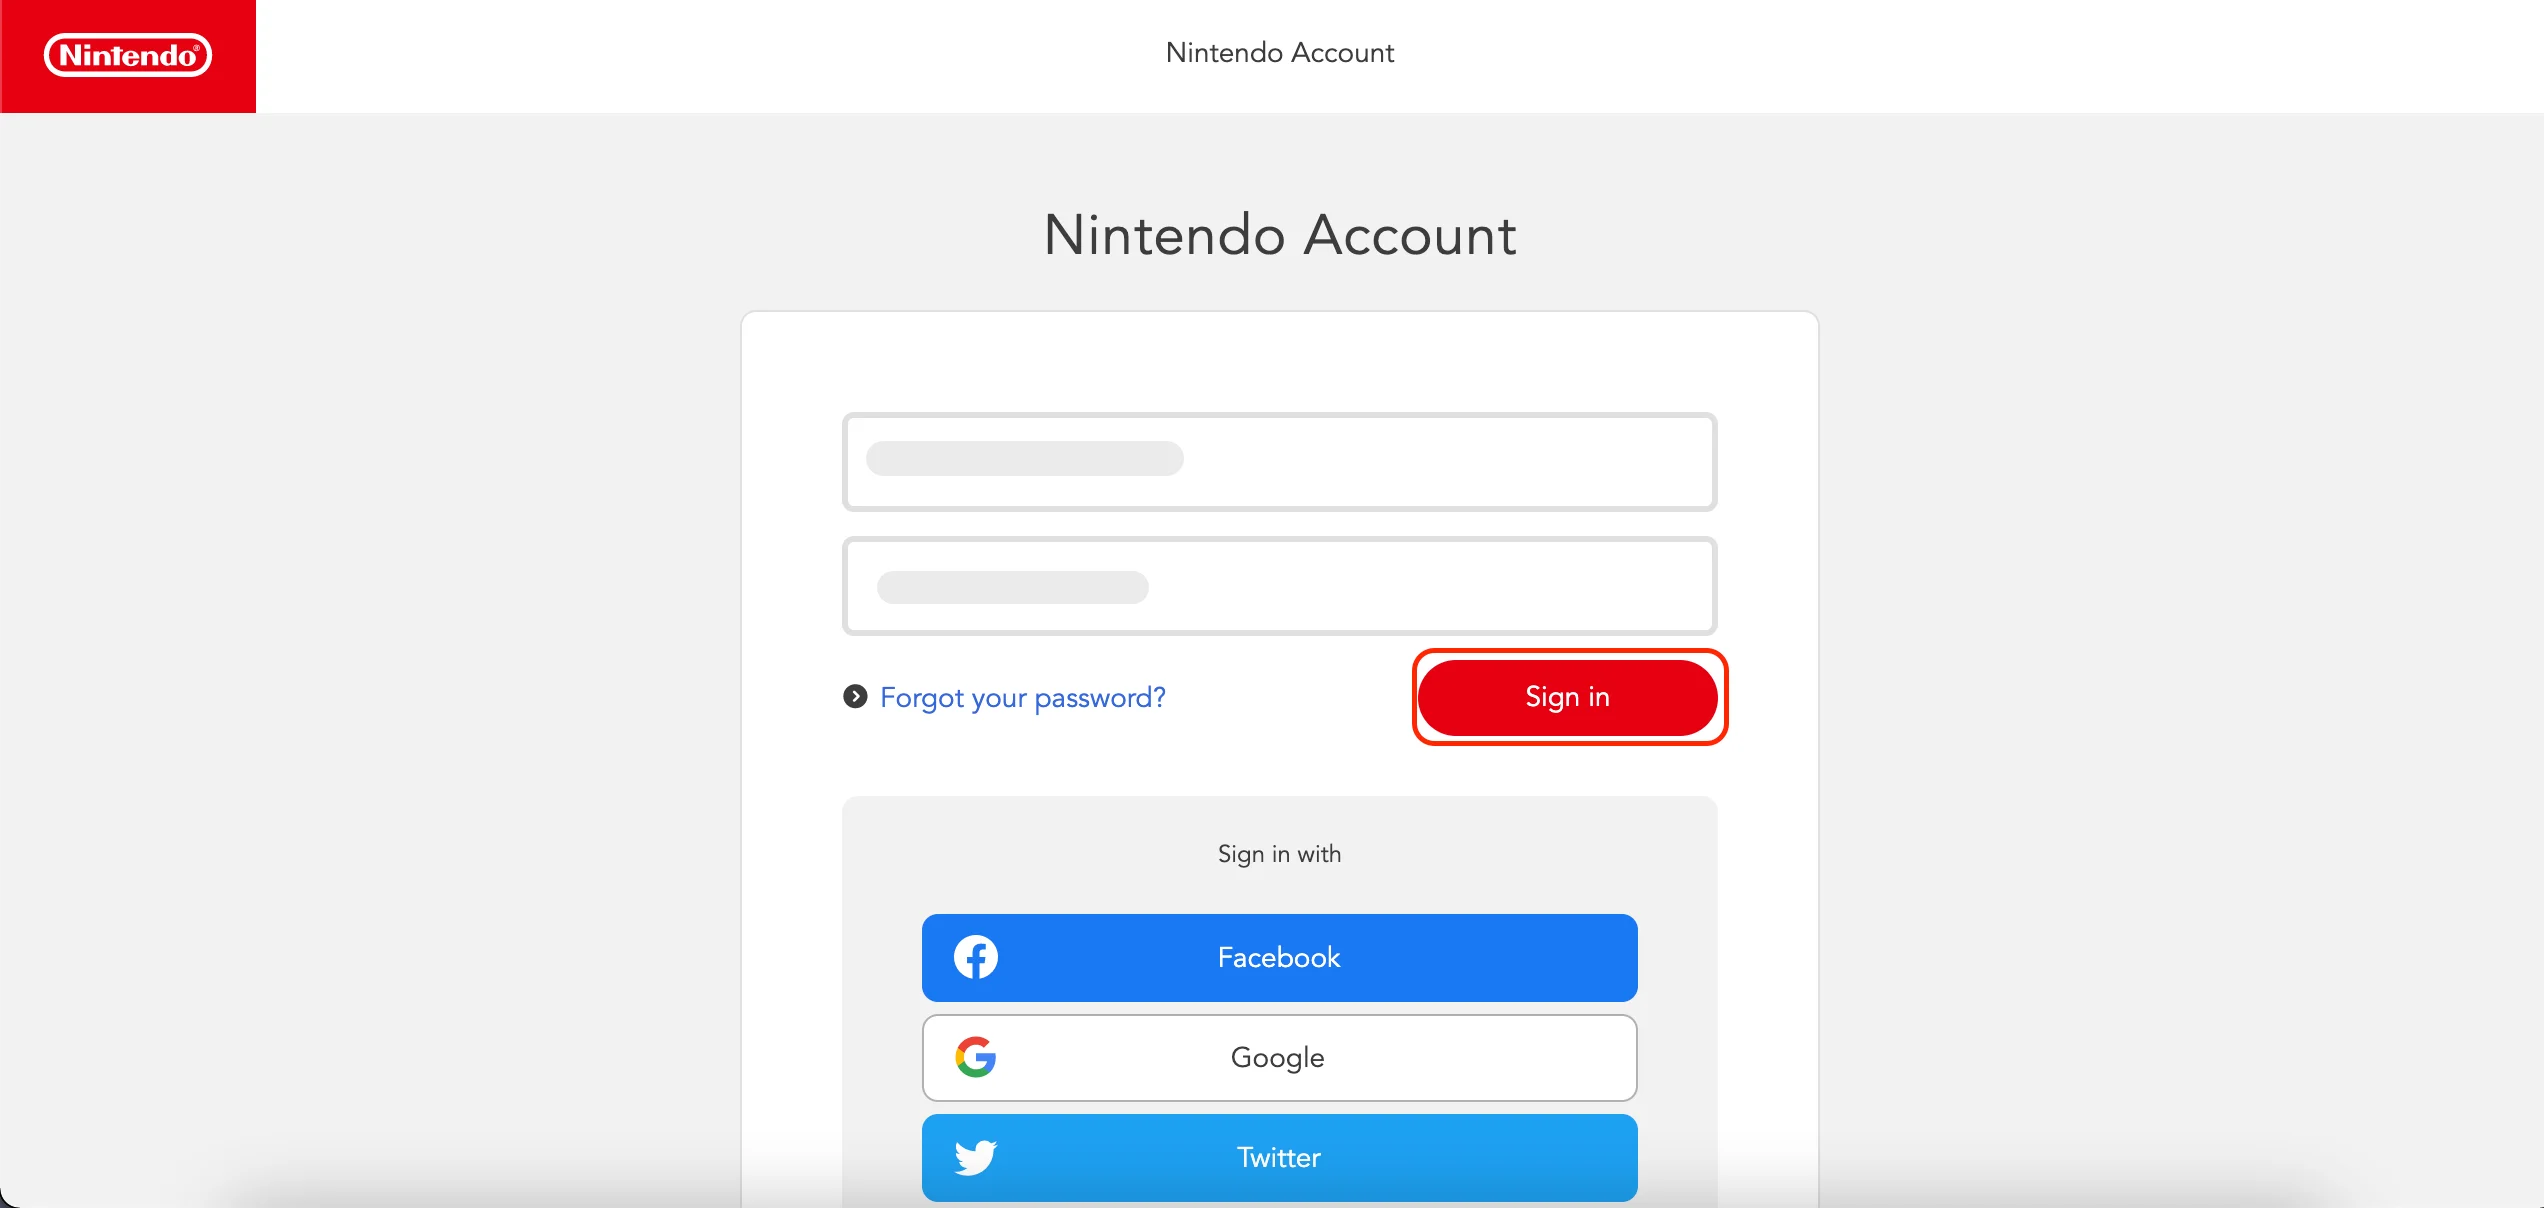 Reset Password (Nintendo Account only), Support